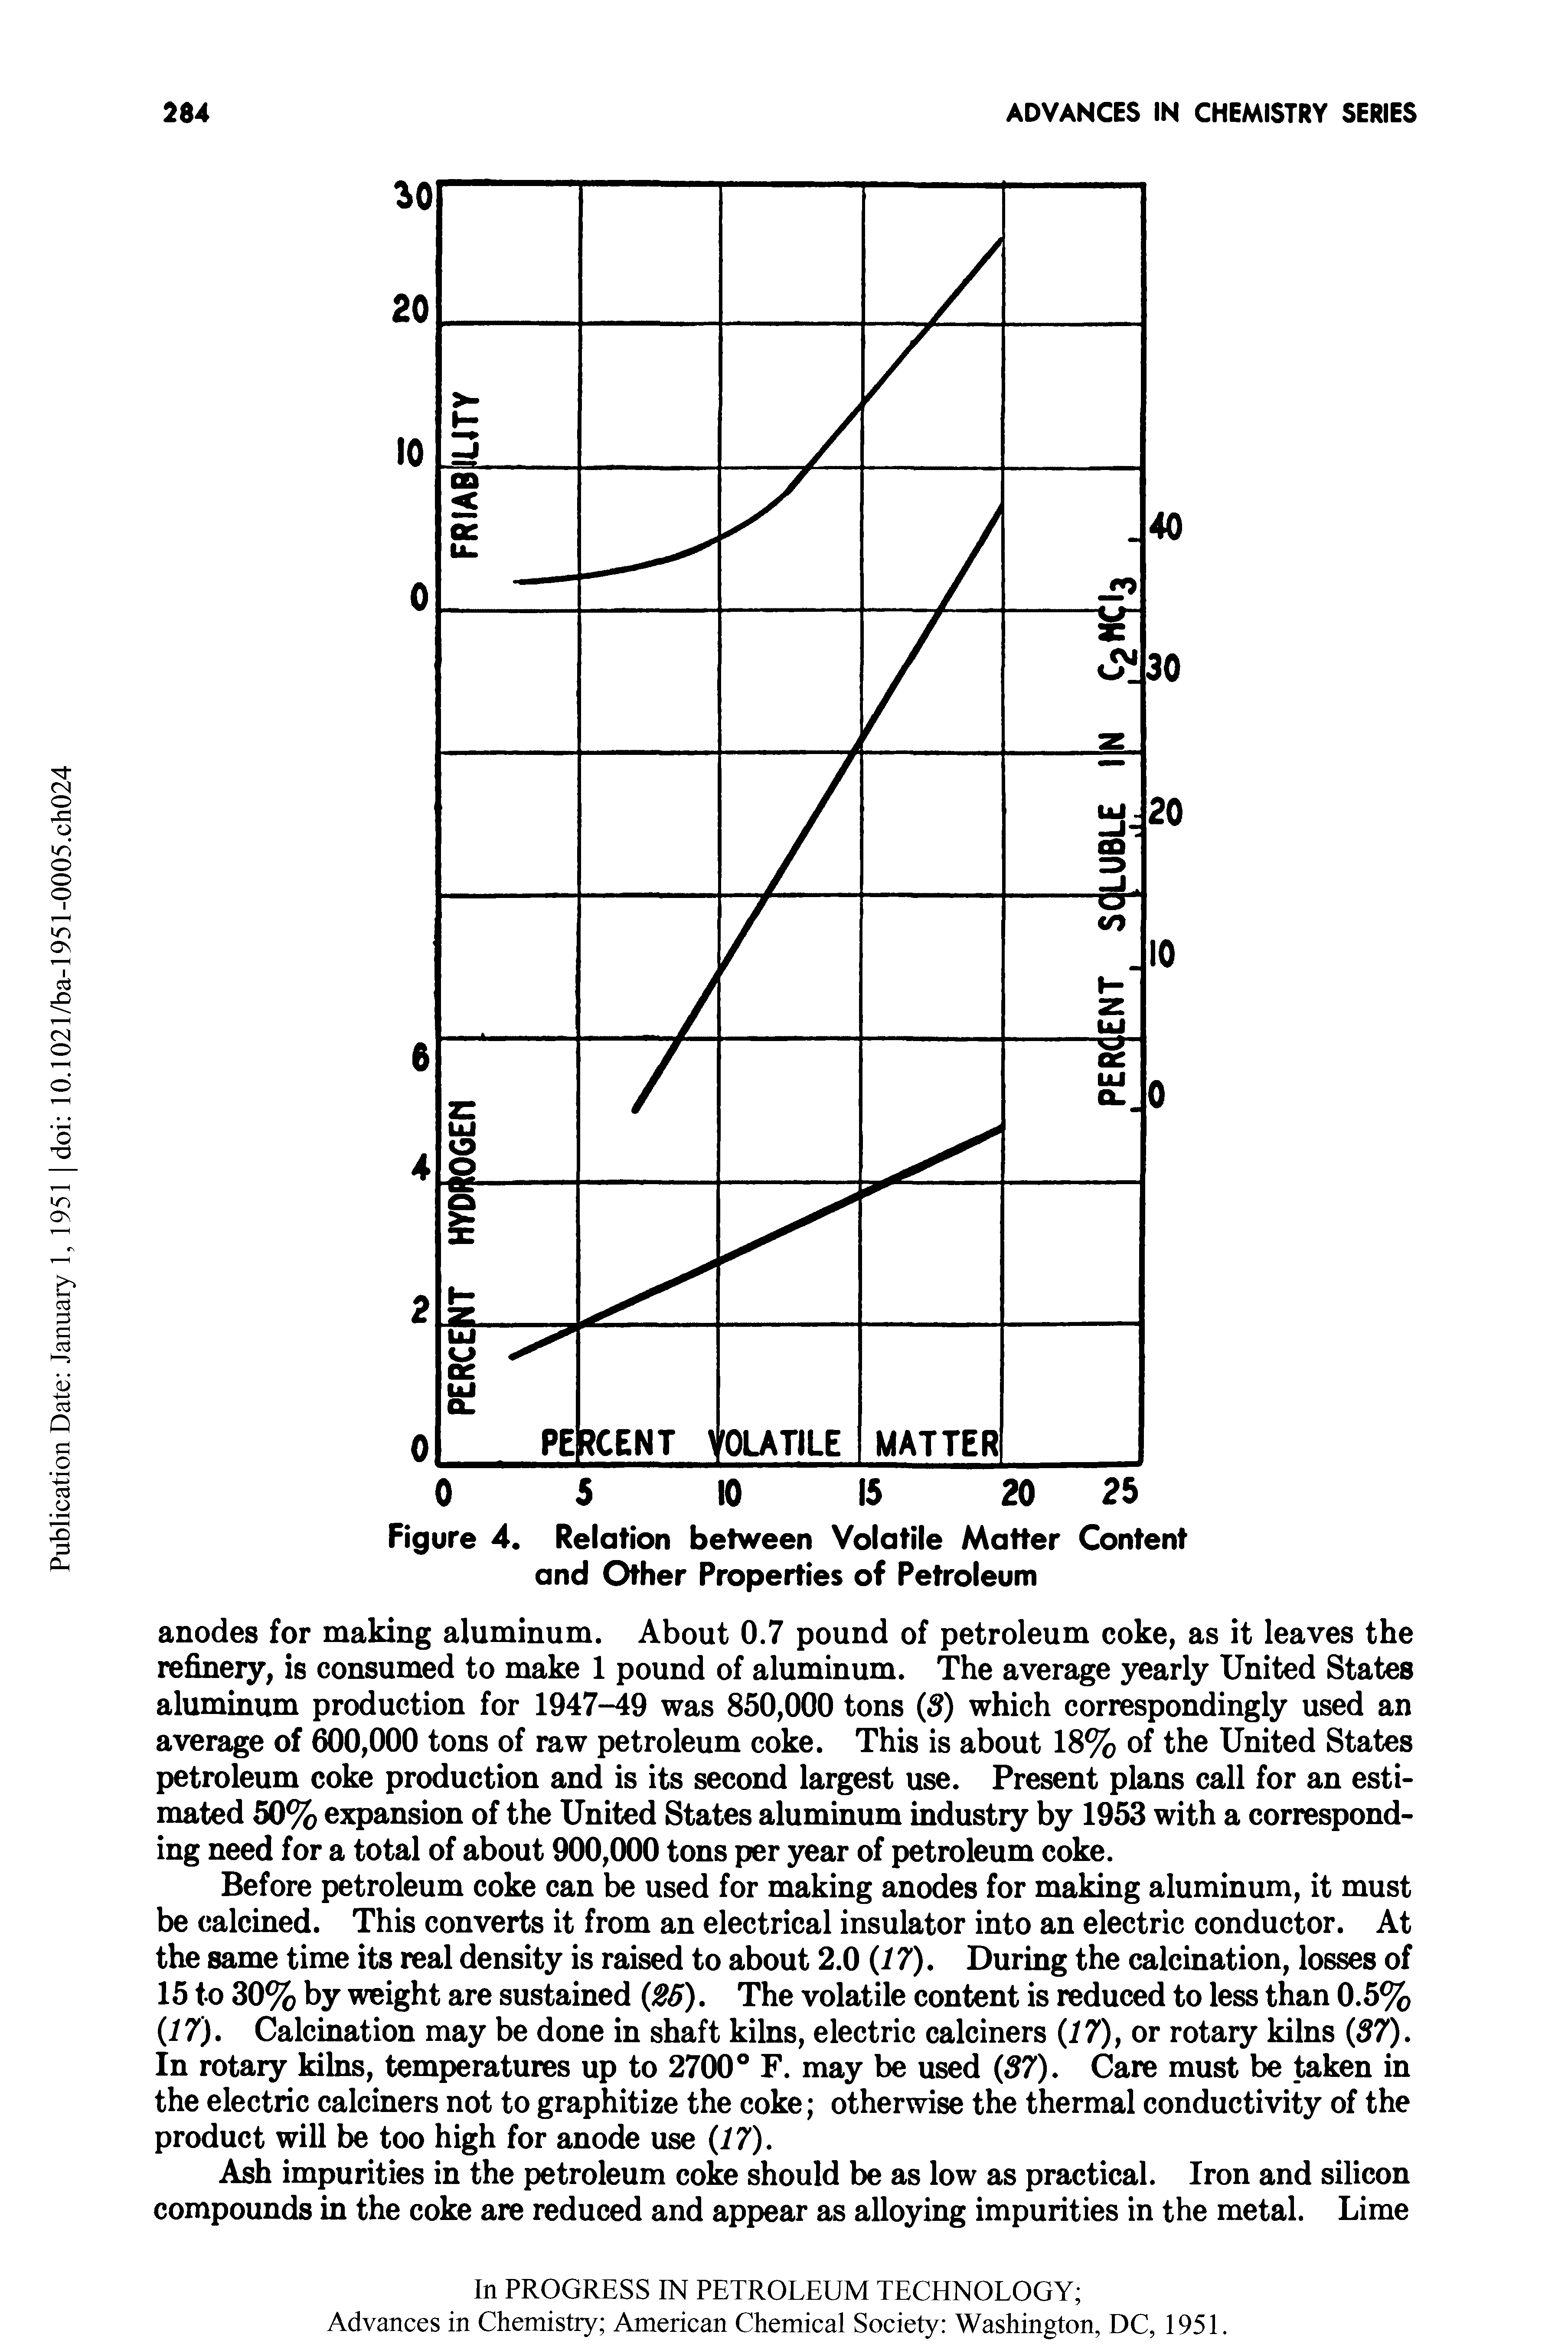 Figure 4. Relation between Volatile Matter Content and Other Properties of Petroleum...